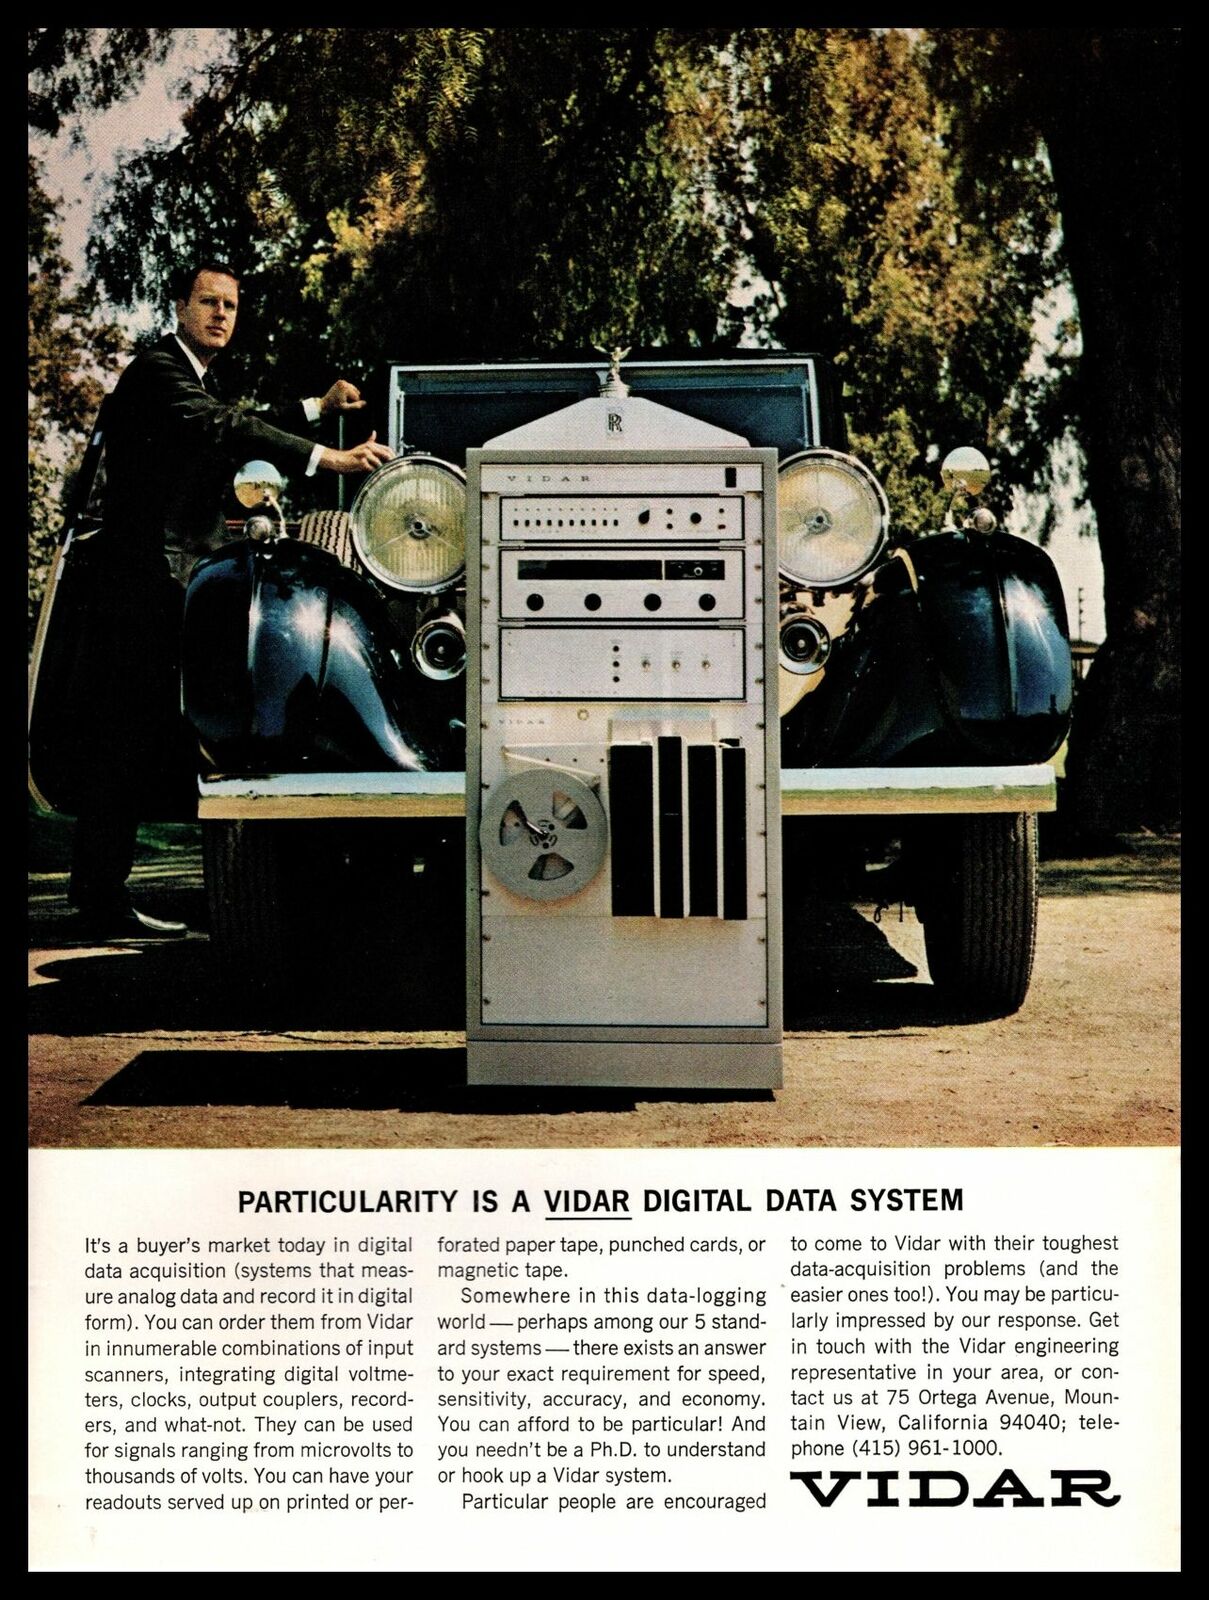 1966 Rolls-Royce Vidar Digital Data System Mountain View California Print Ad